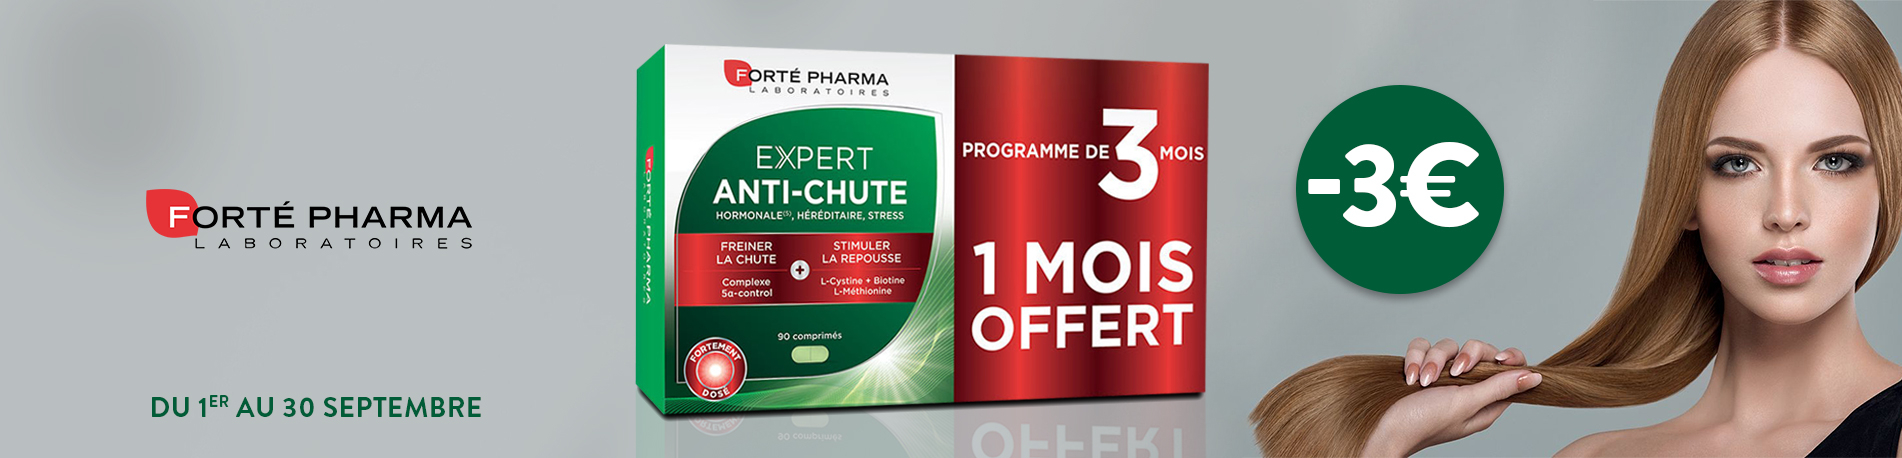 Promotion Forte Pharma Expert Anti-chute